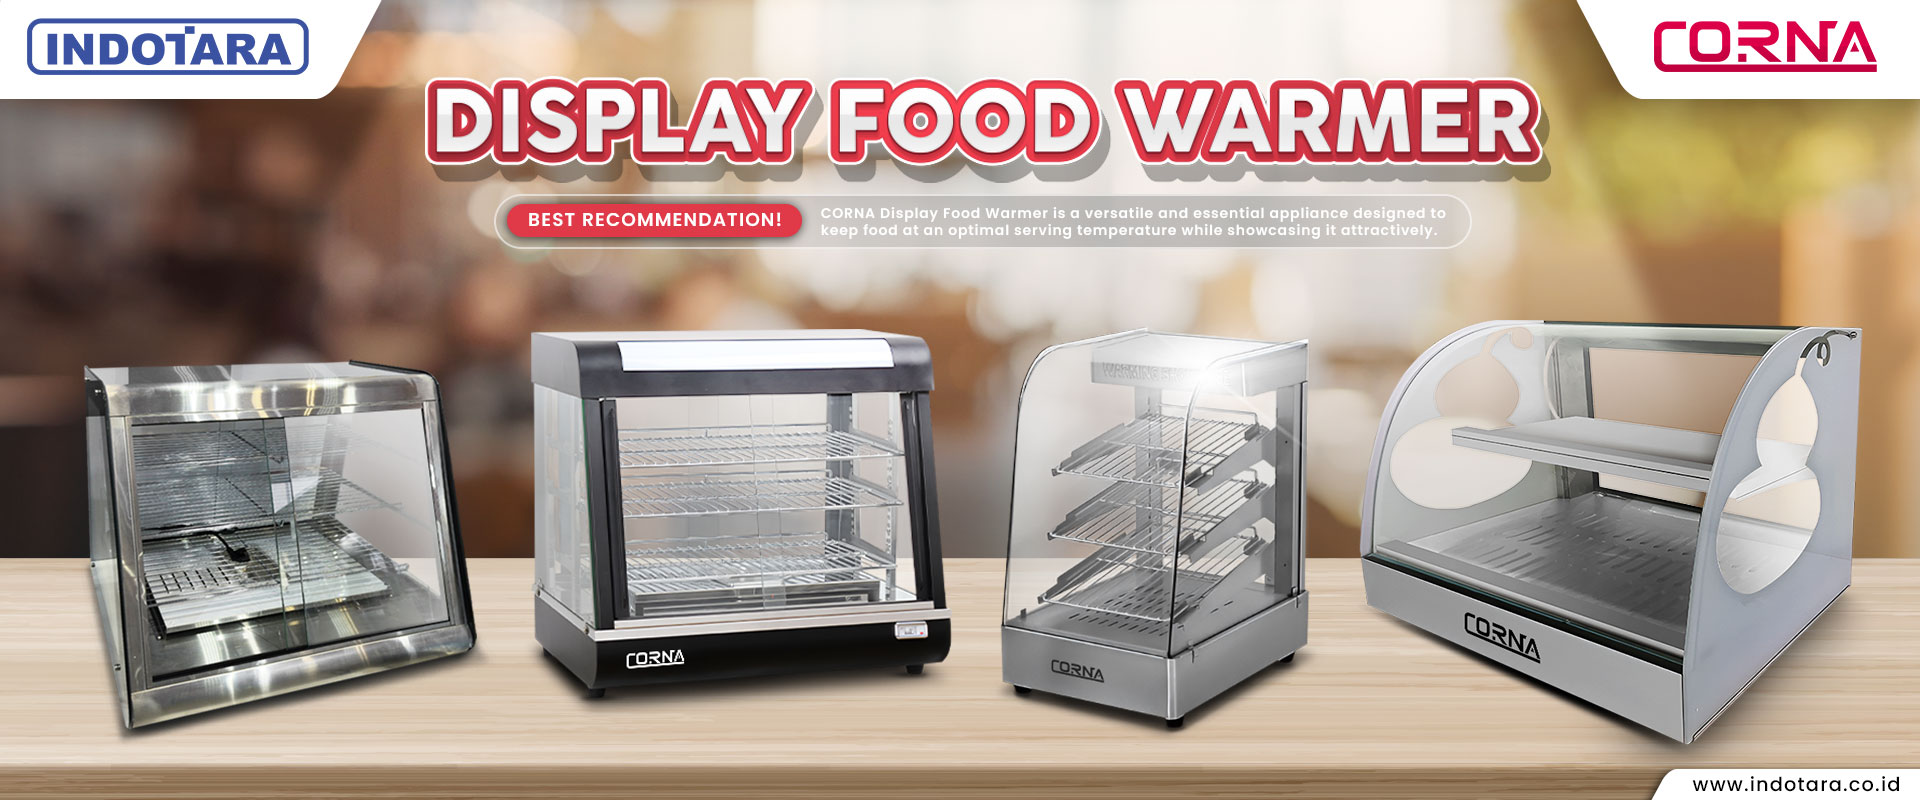 Jual CORNA Display Food Warmer